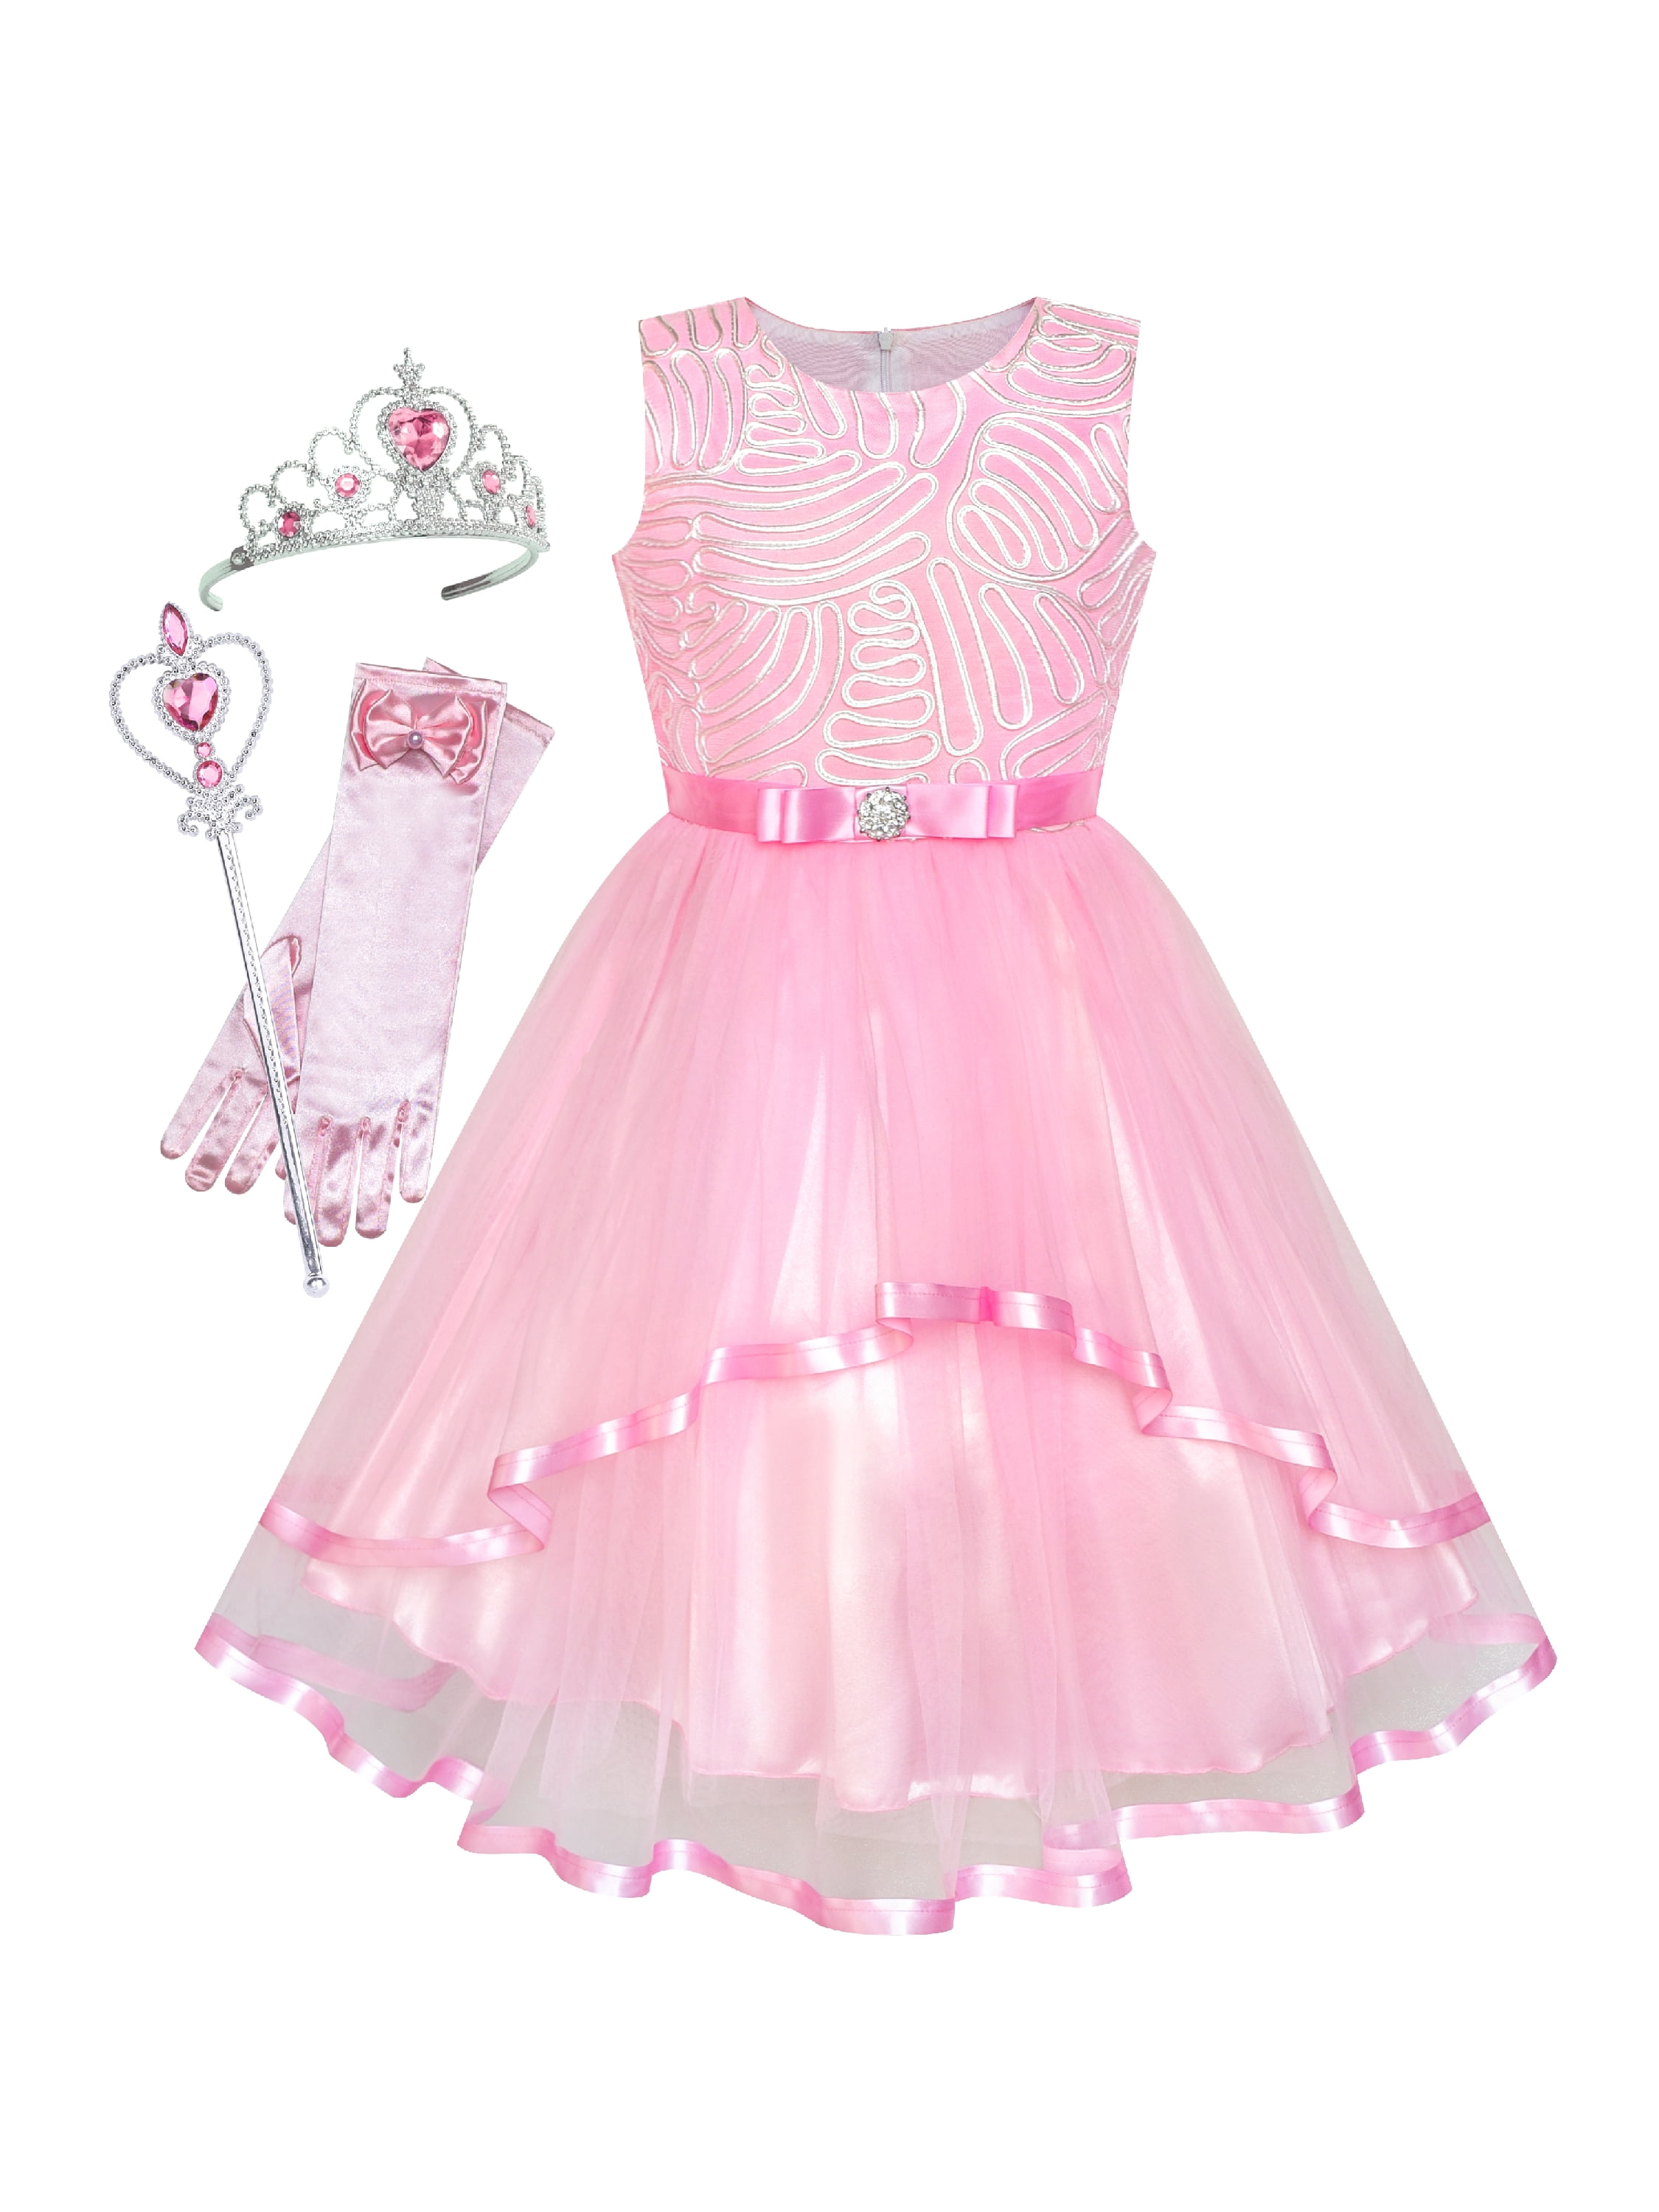 Pink Princess Dresses For Girls